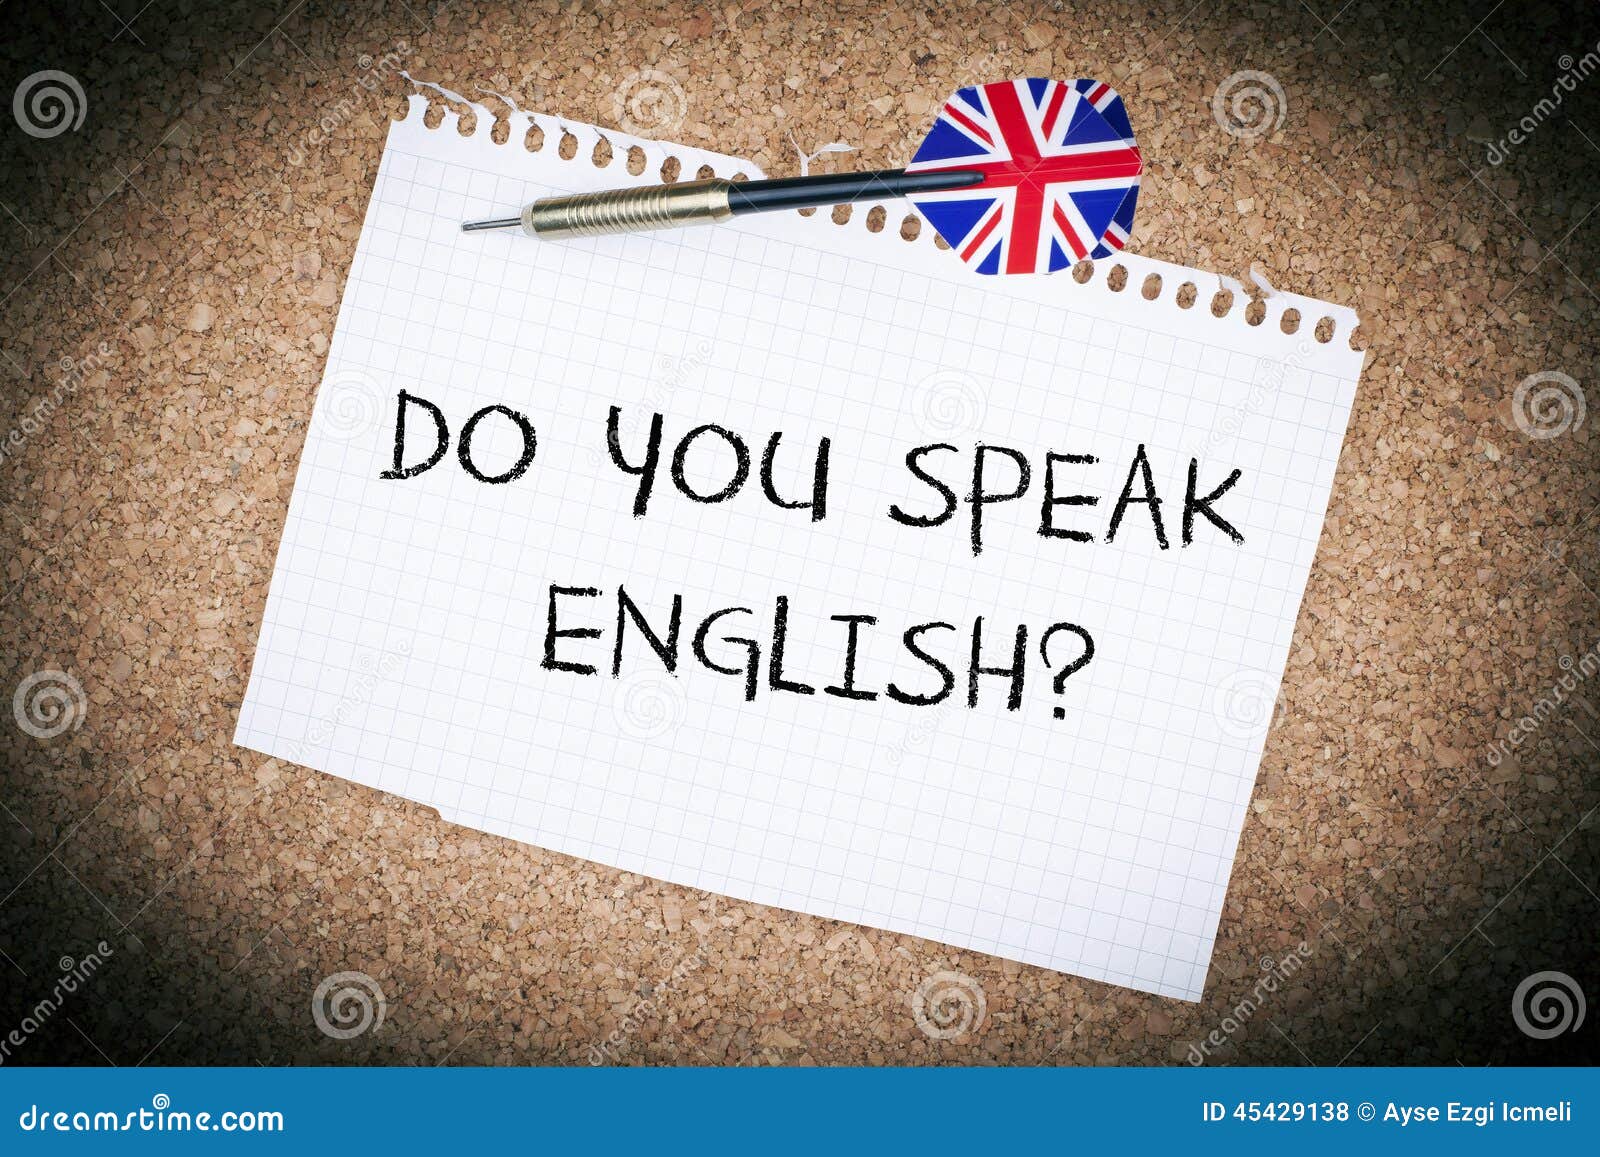 I don t can speak english. Английский do you speak English. Do you speak English картинки. Do you speak English надпись. Плакат do you speak English.